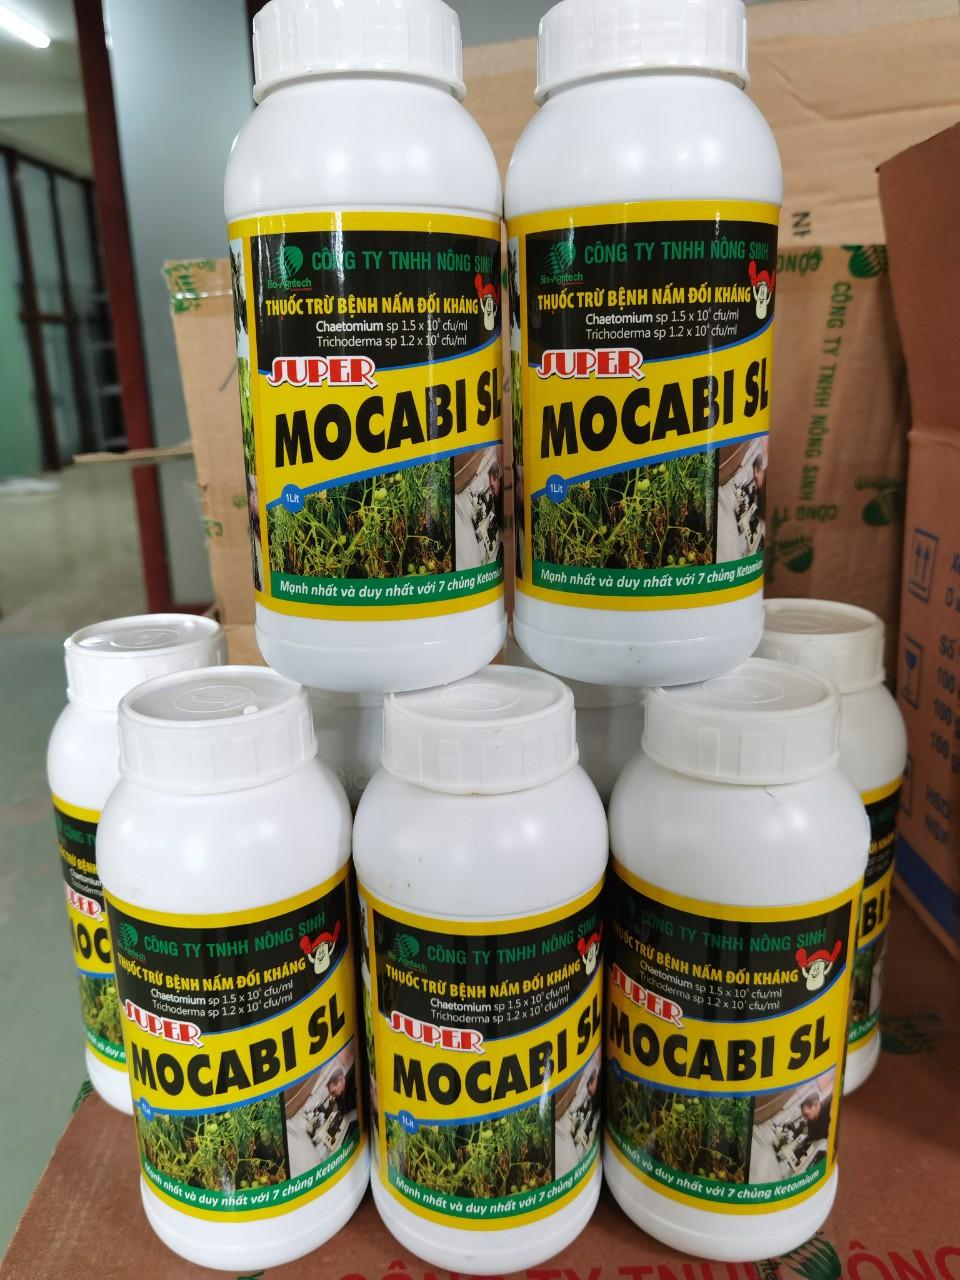 MOCABI SL